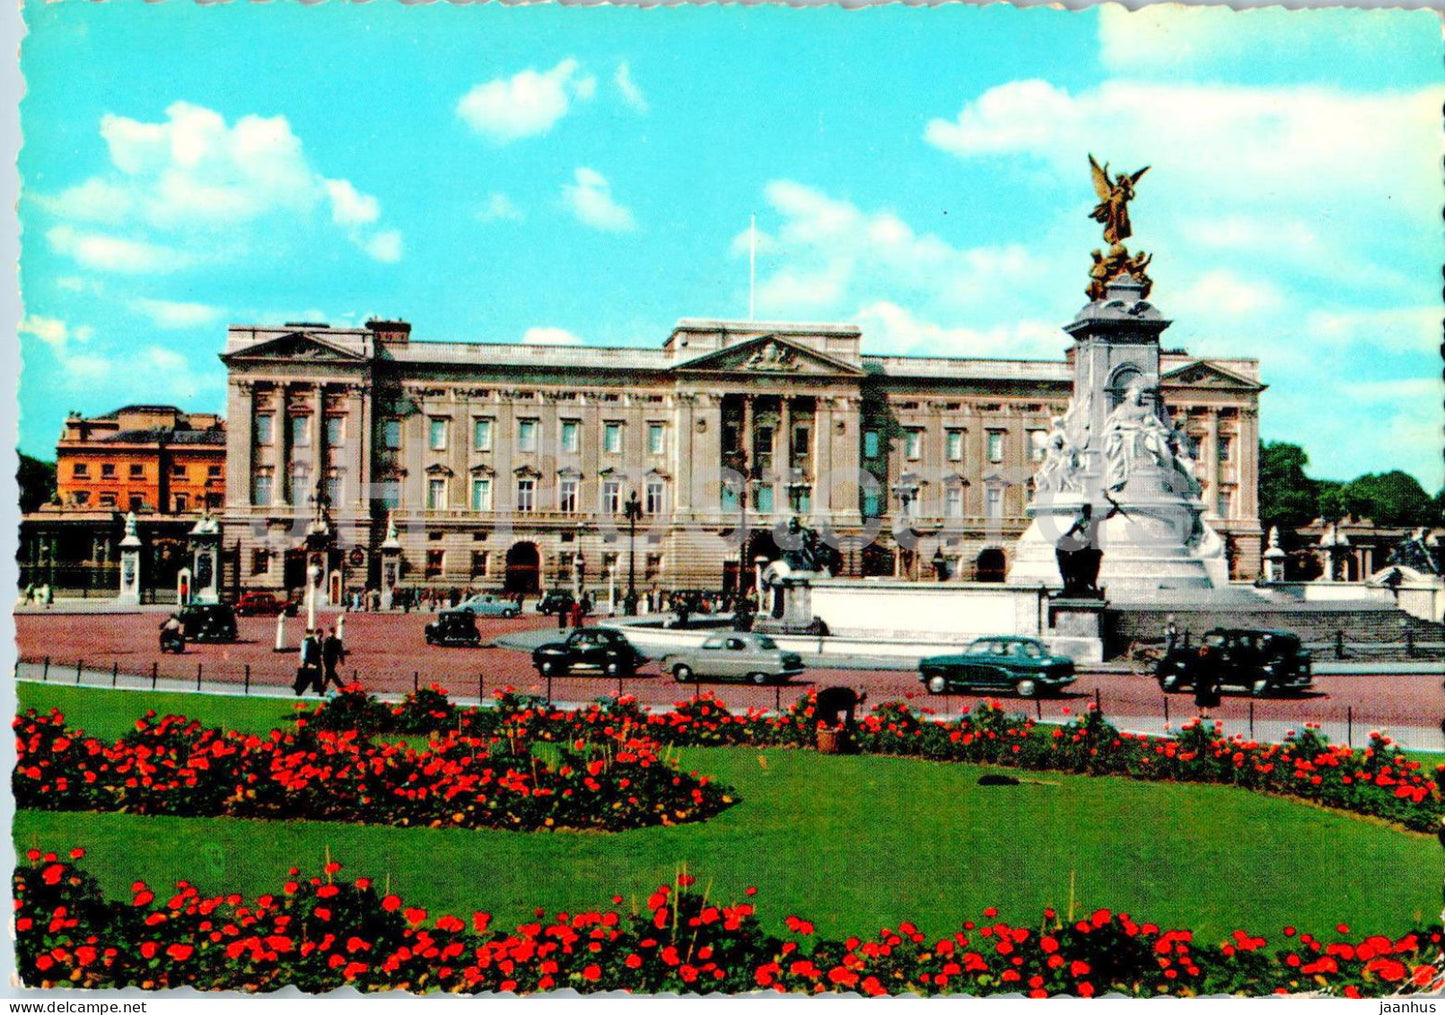 London - Buckingham Palace and Victoria Memorial - LD/5 - England - United Kingdom - used